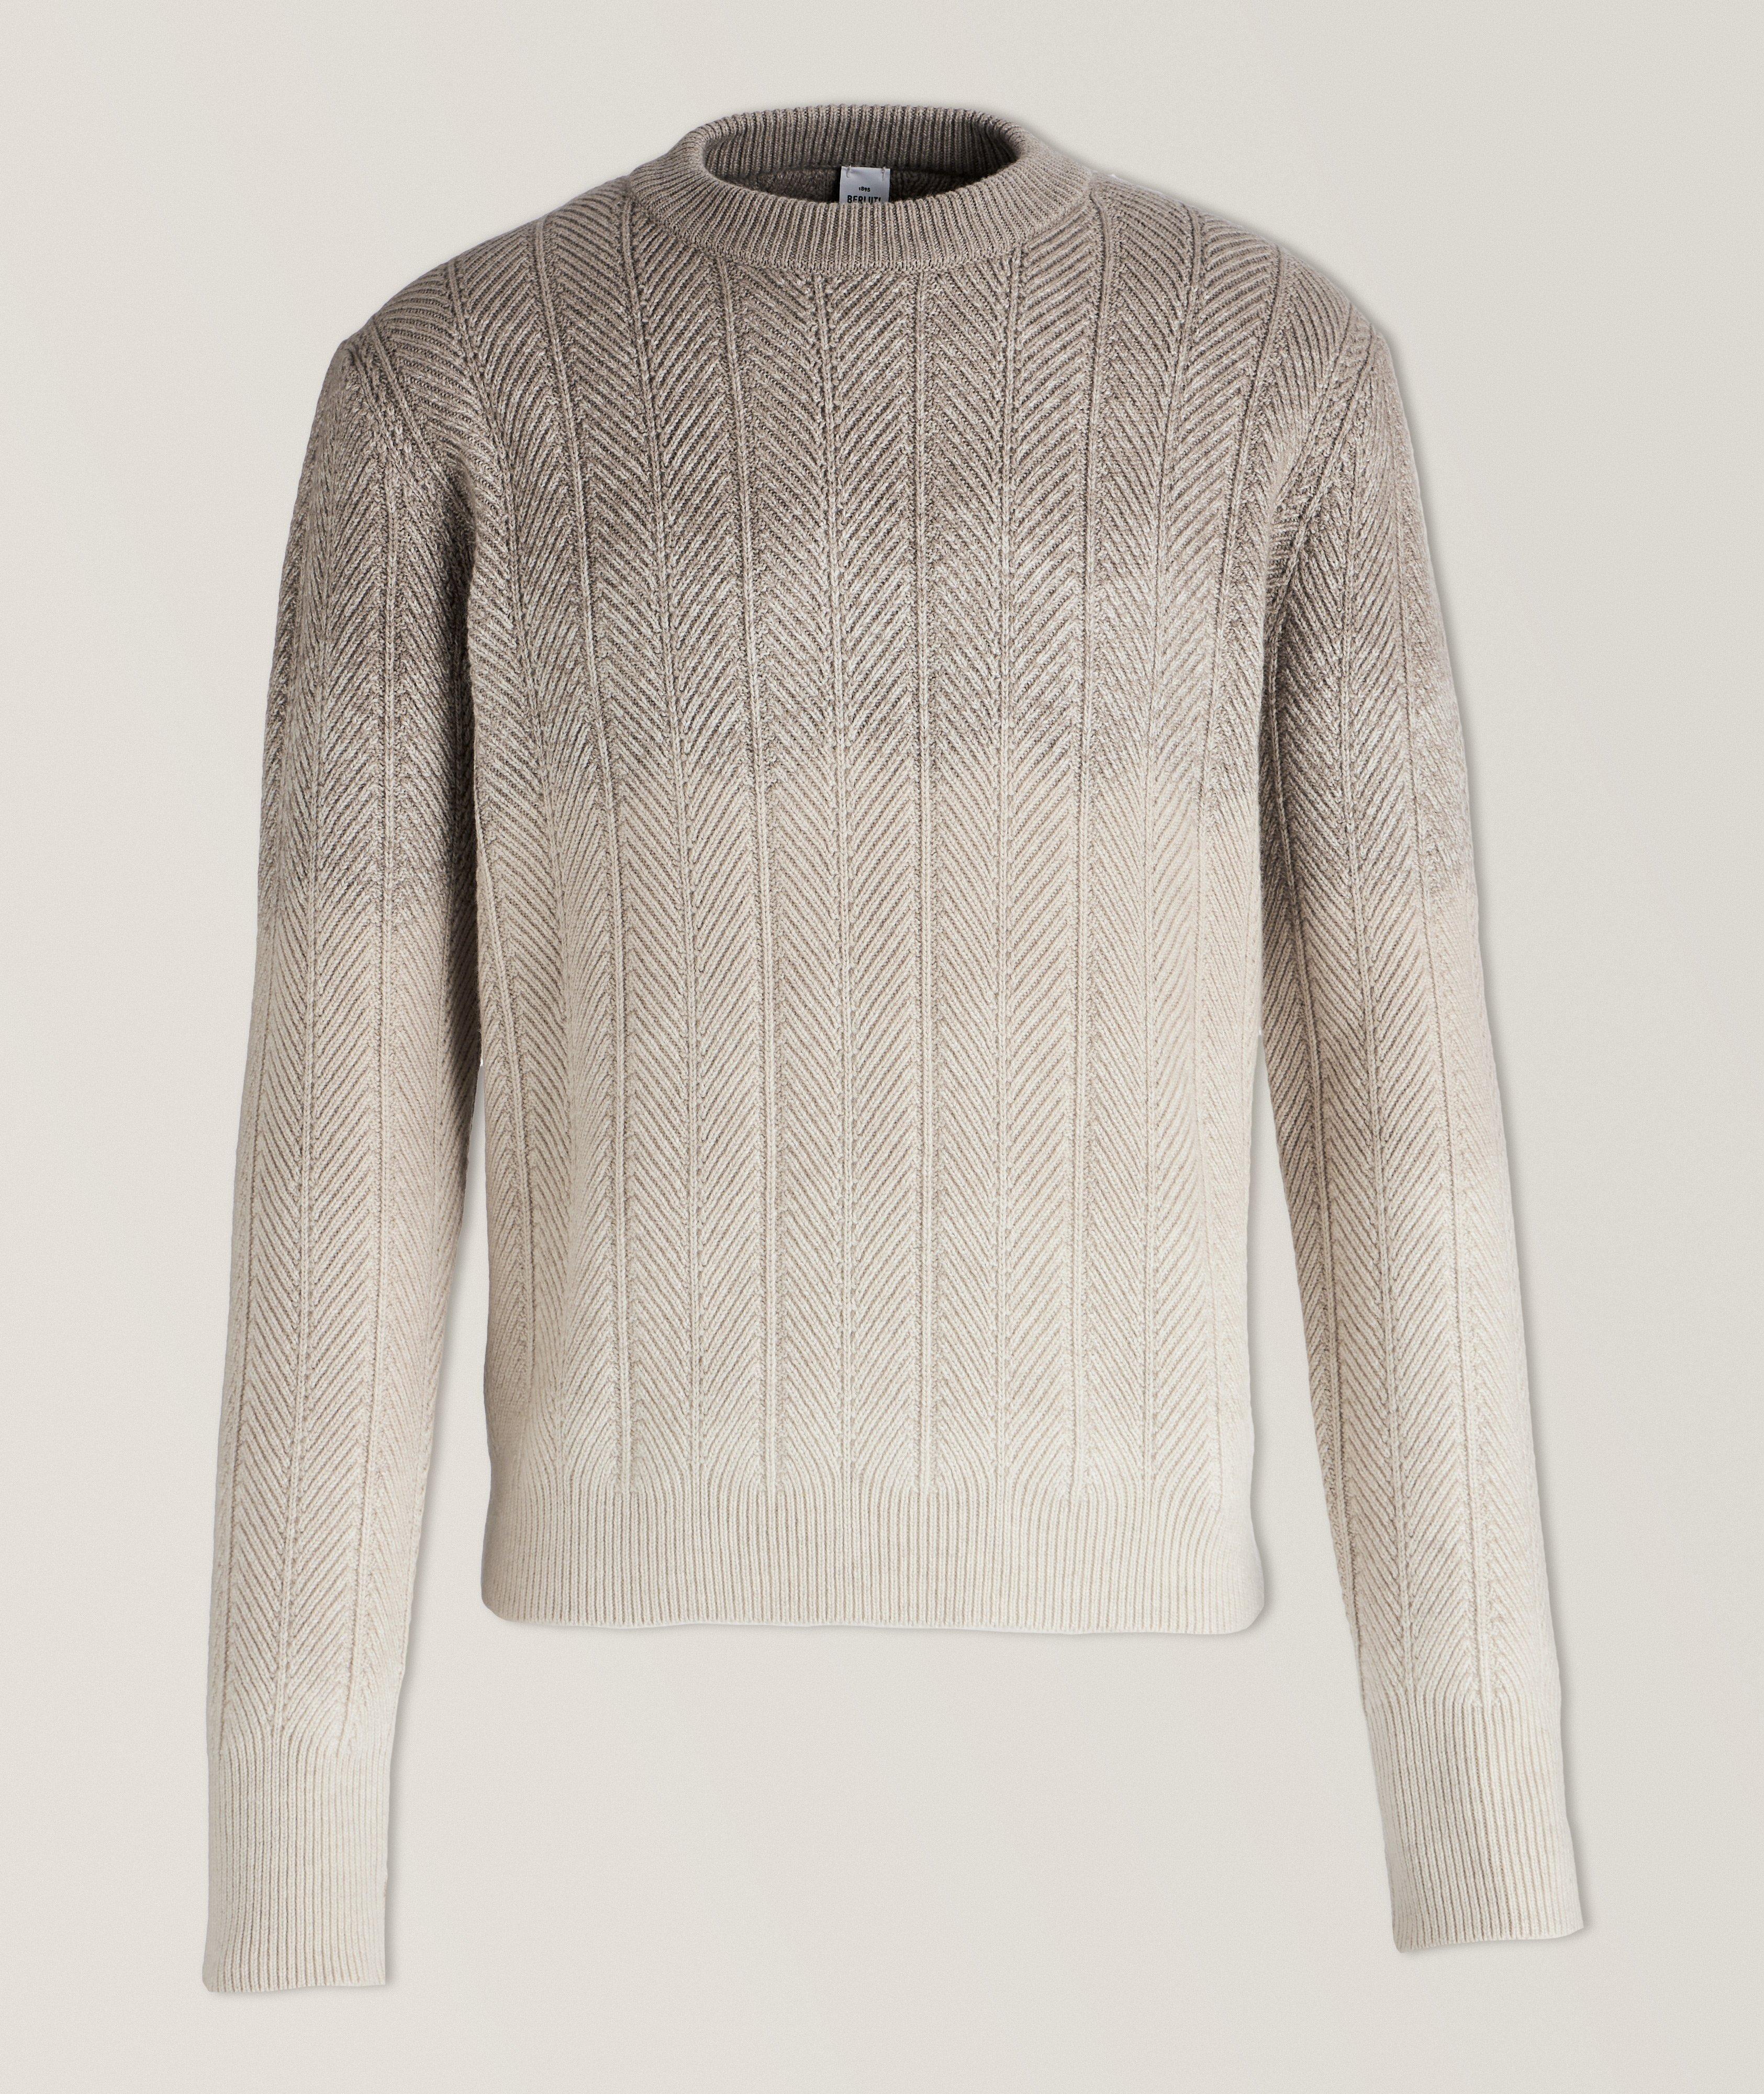 Berluti Gradient Herringbone Knit Cashmere Sweater | Sweaters